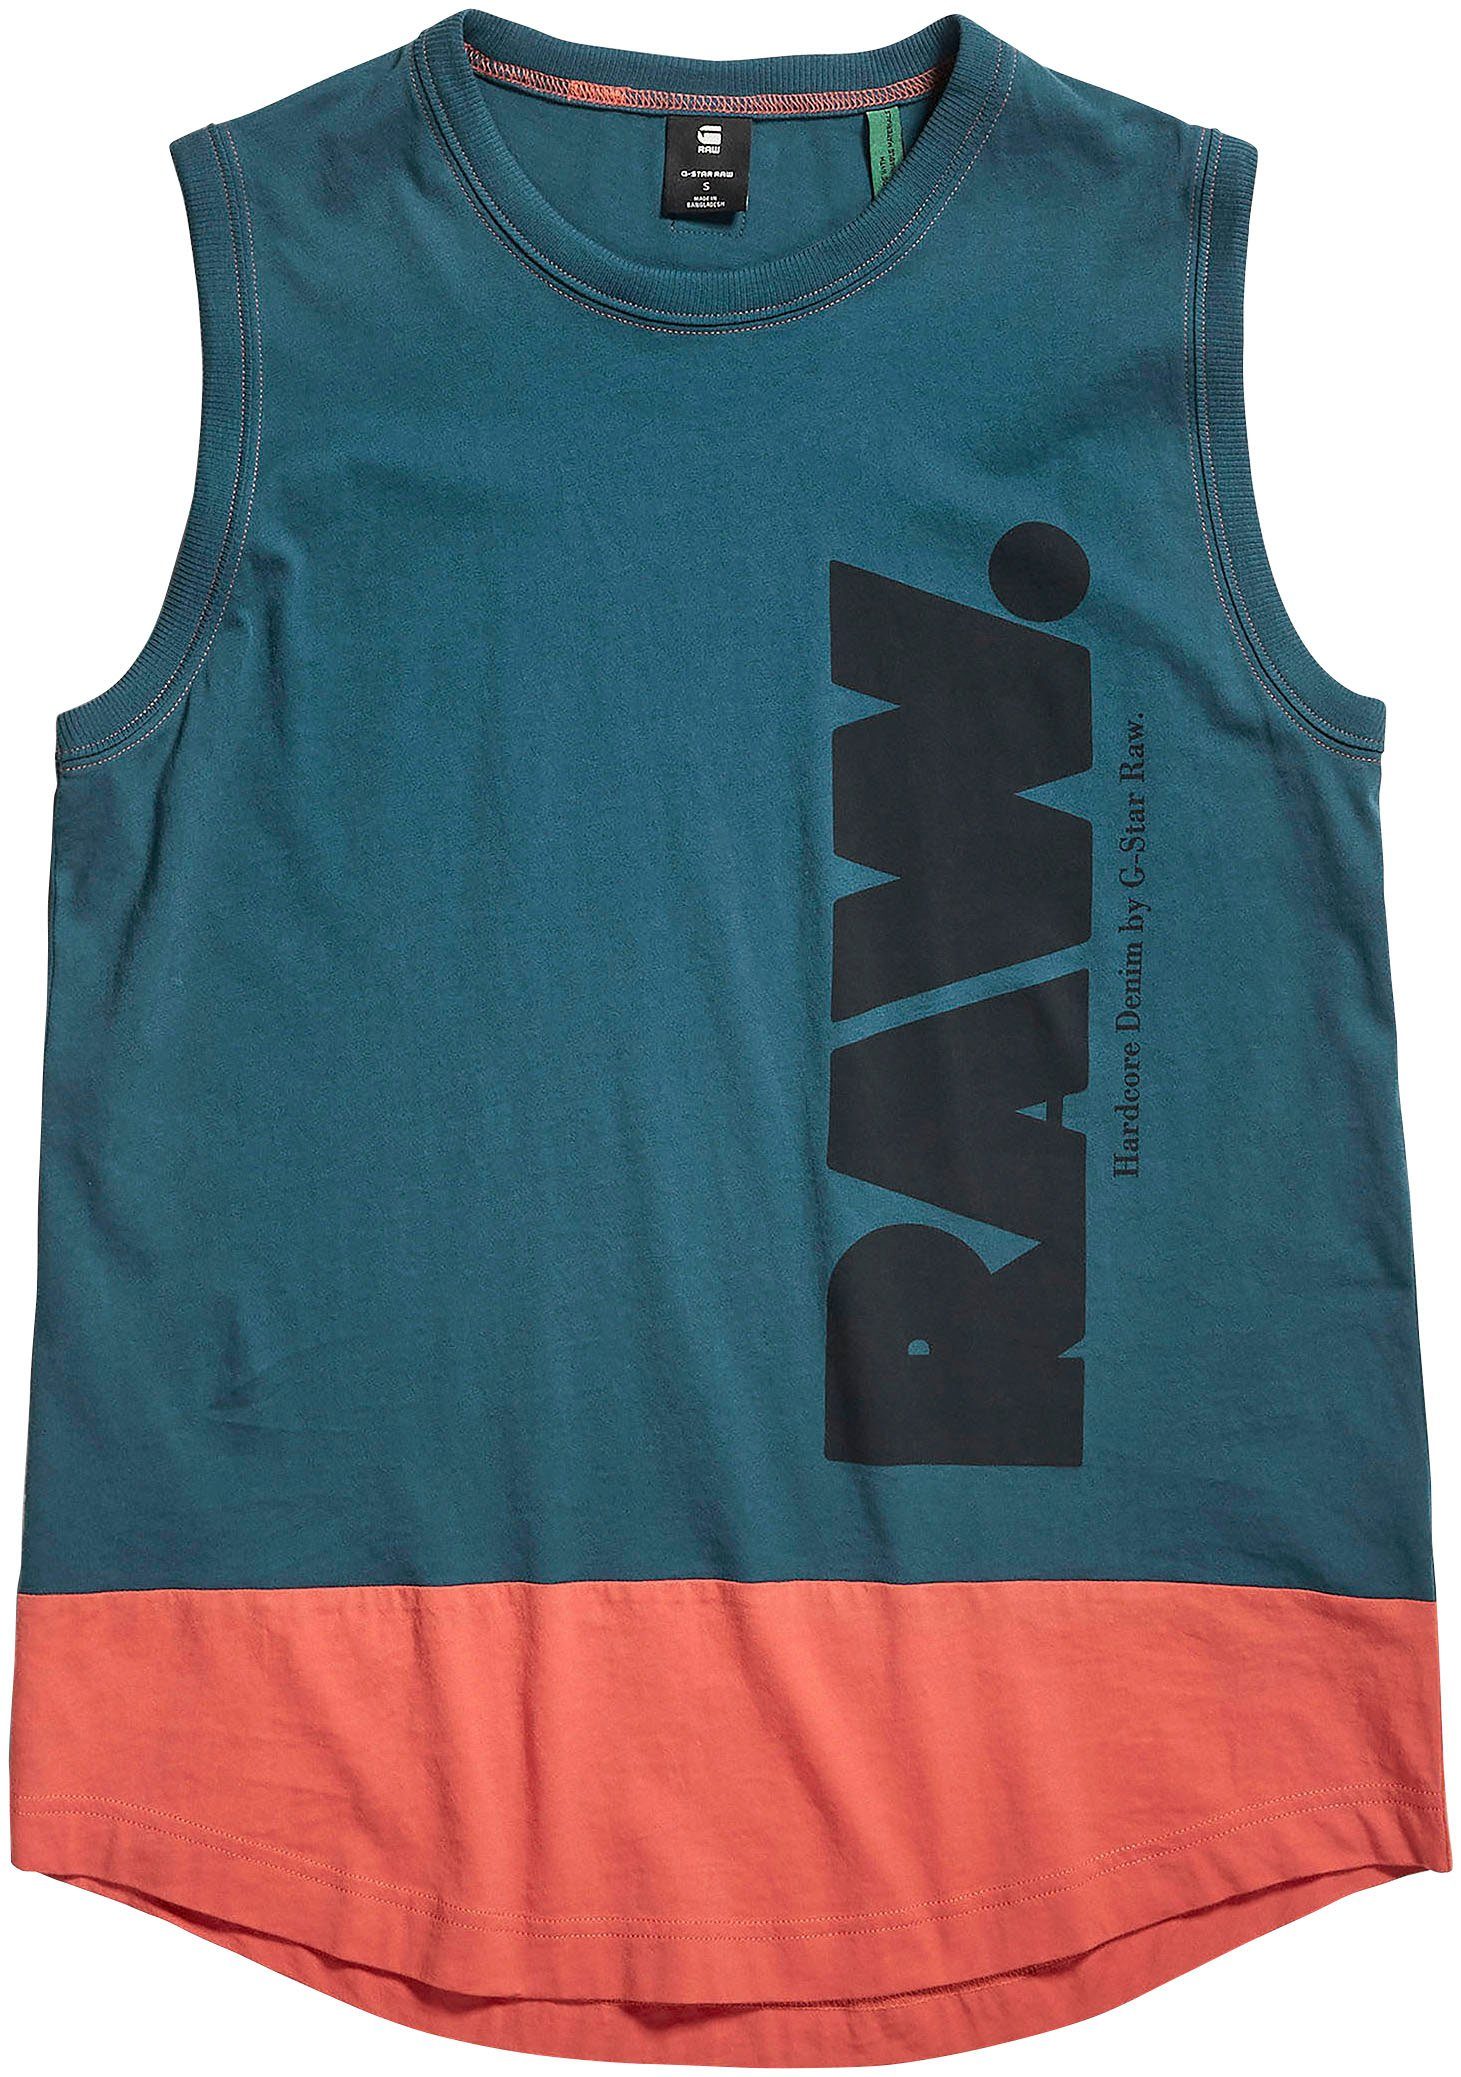 RAW Lash Logo block tank block vorne mti nitro/paprika G-Star T-Shirt color to rotorange) Grafikdruck color T-Shirt (petrol/